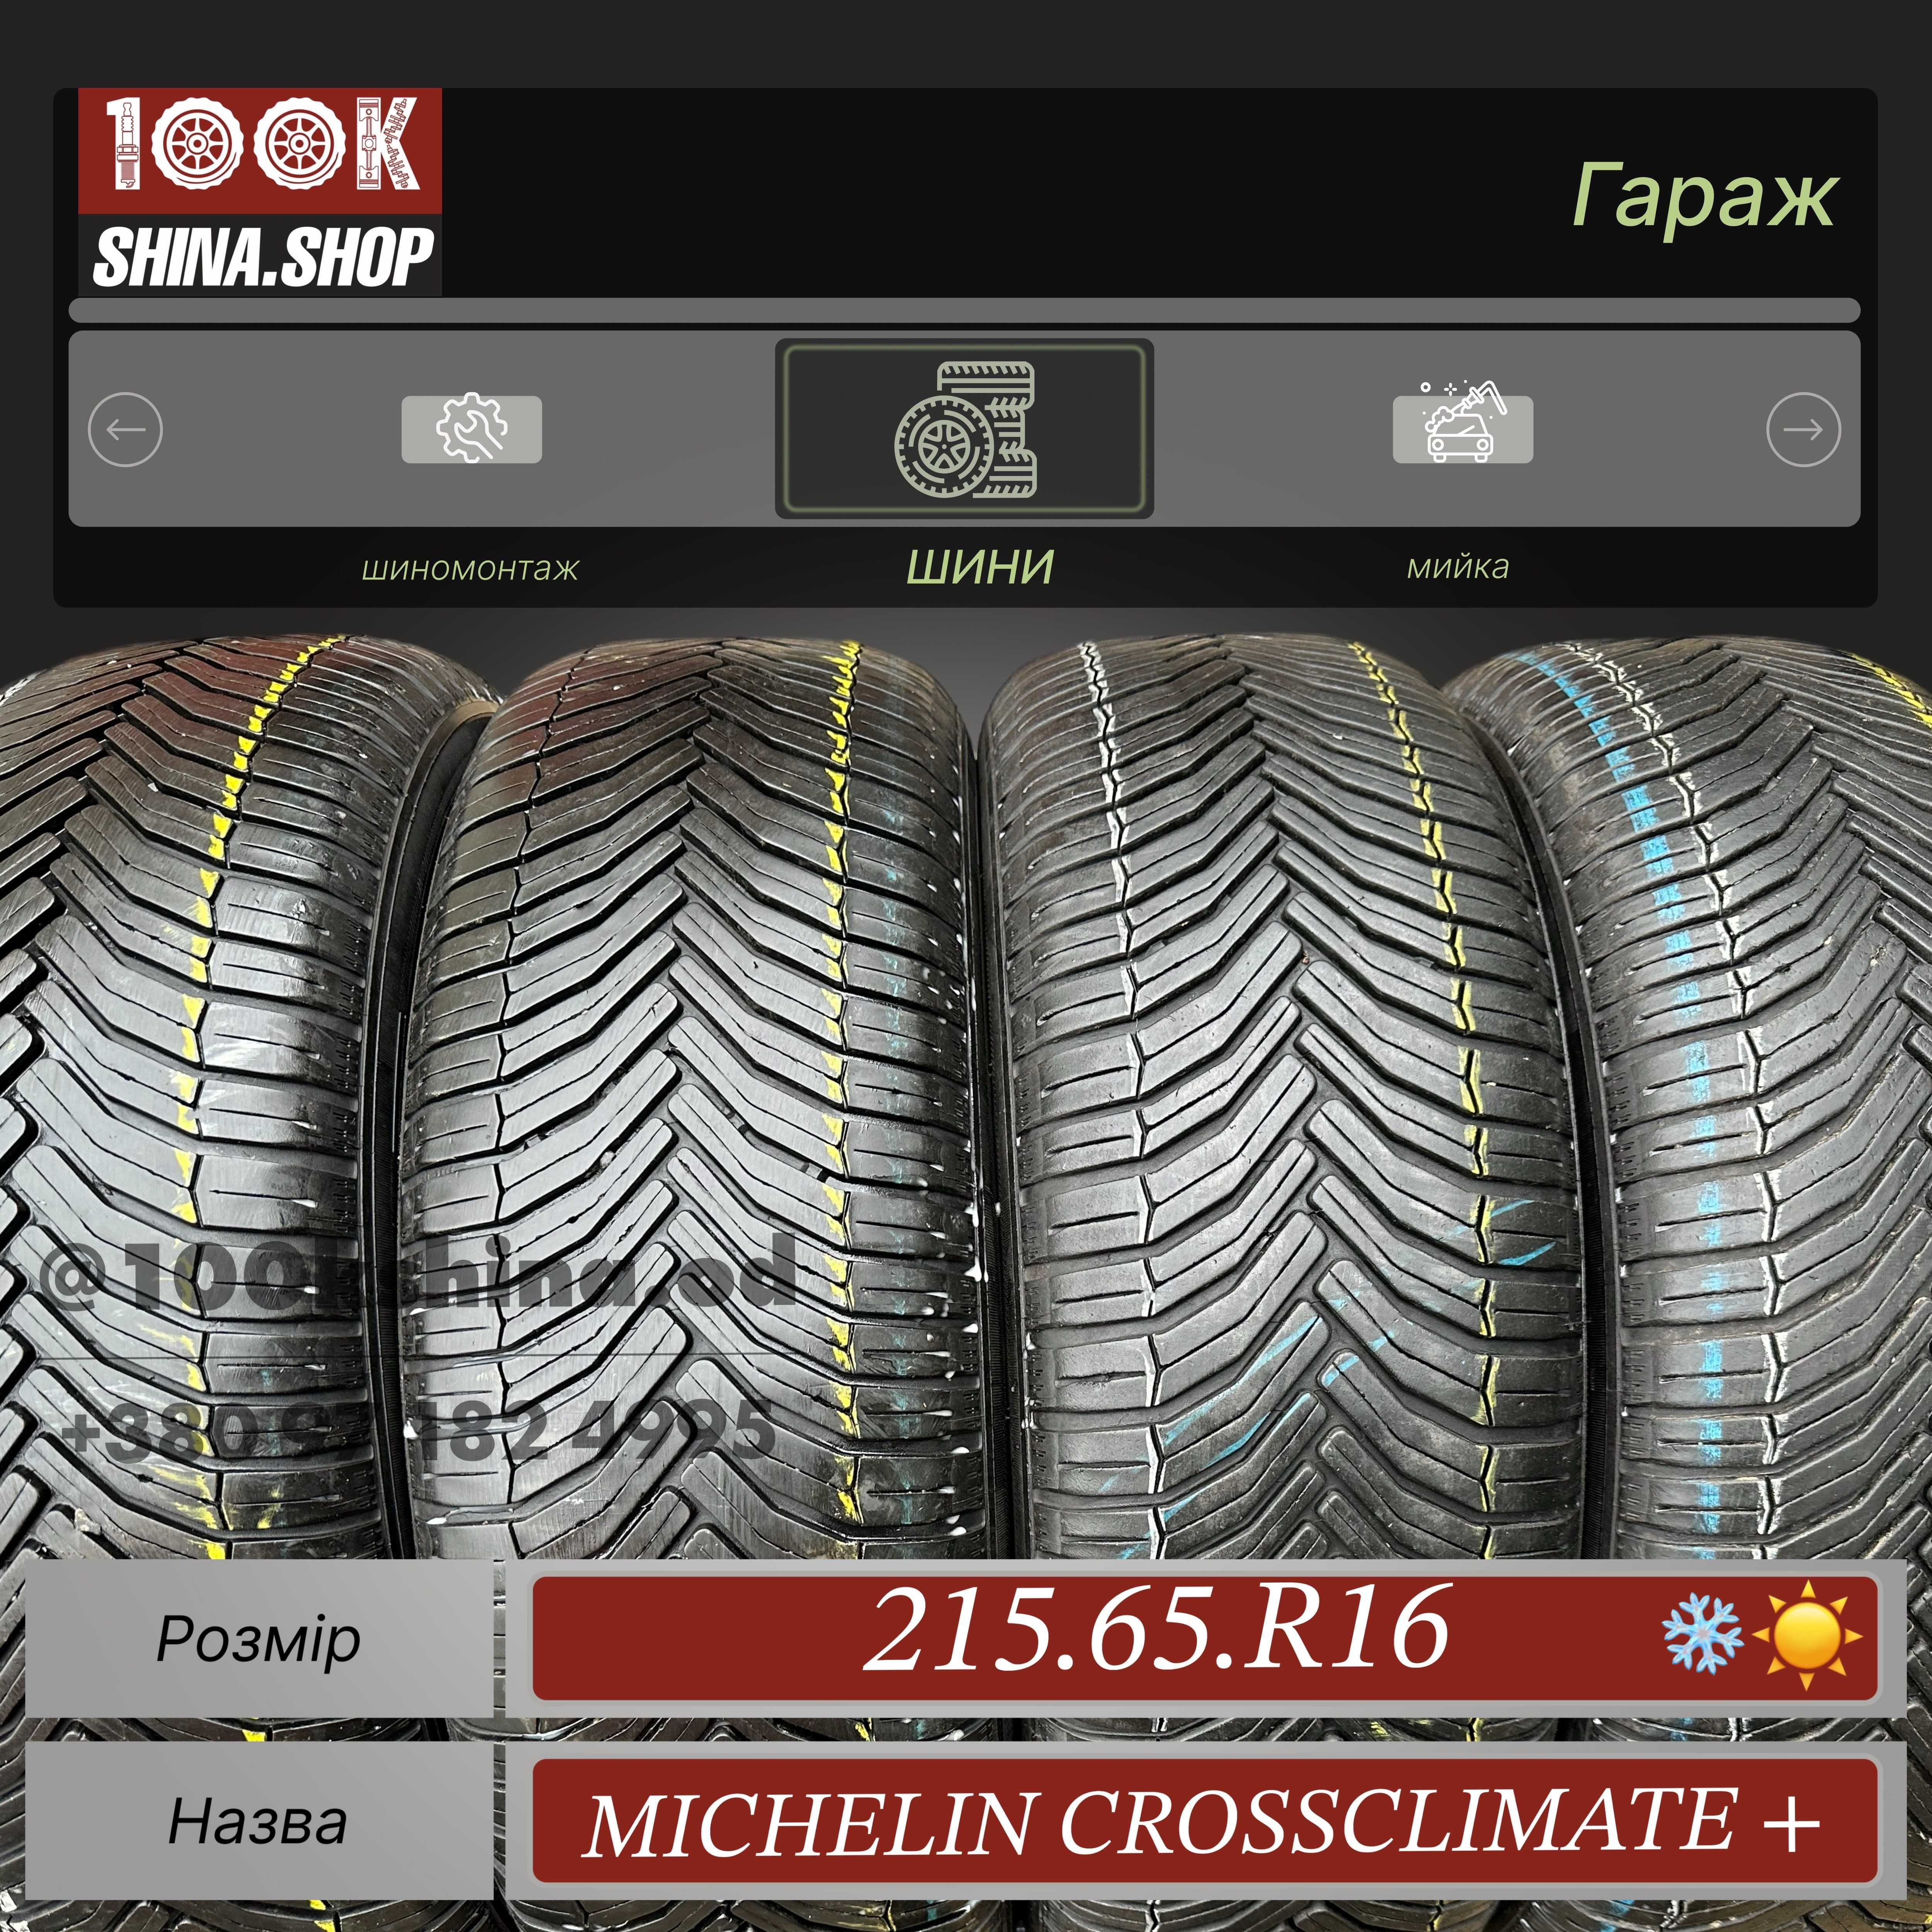 Шины БУ 215 65 R 16 Michelin CrossClimate + Резина Всесезонная